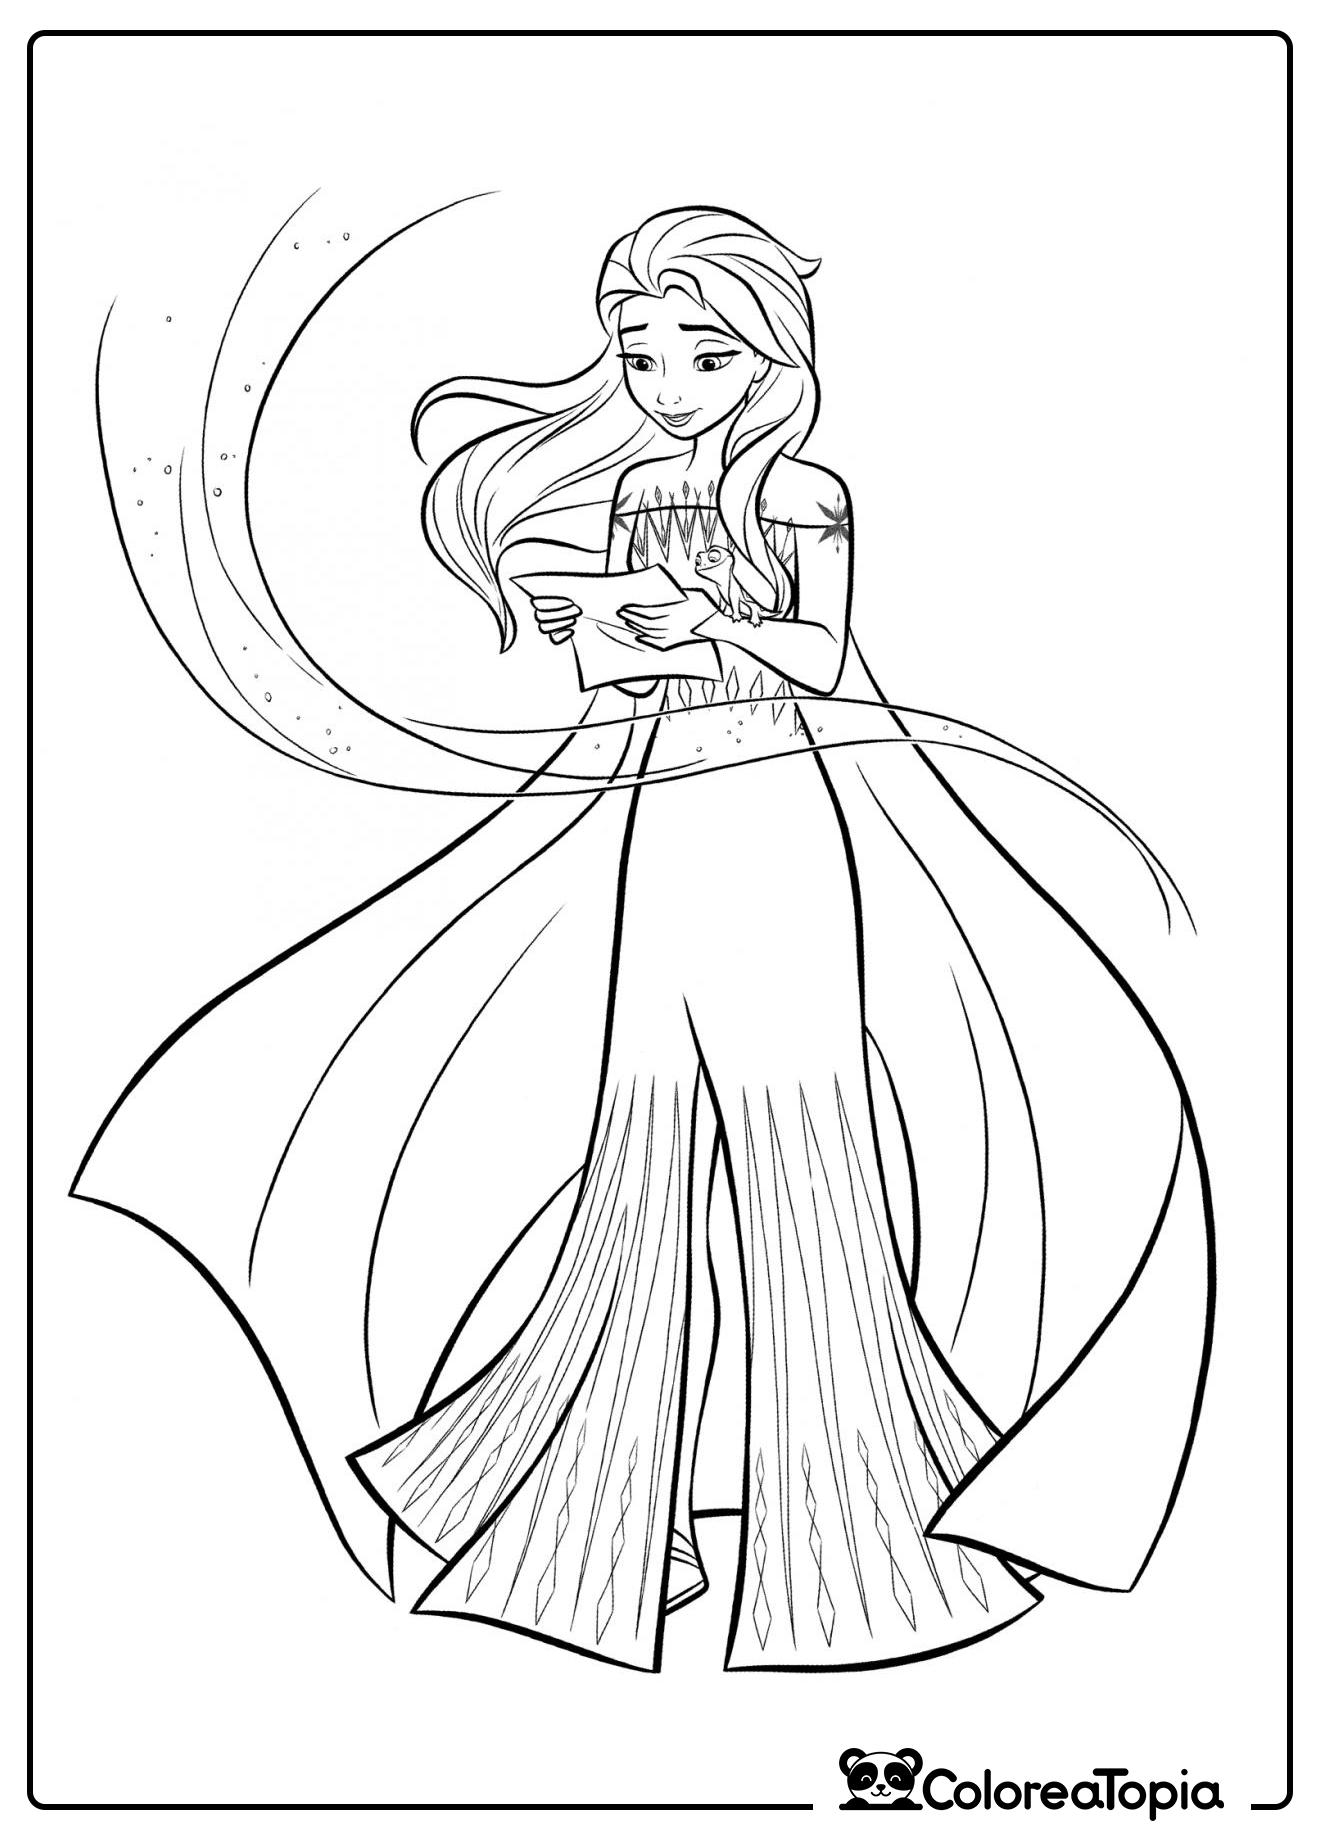 Elsa lee una nota - dibujo para colorear